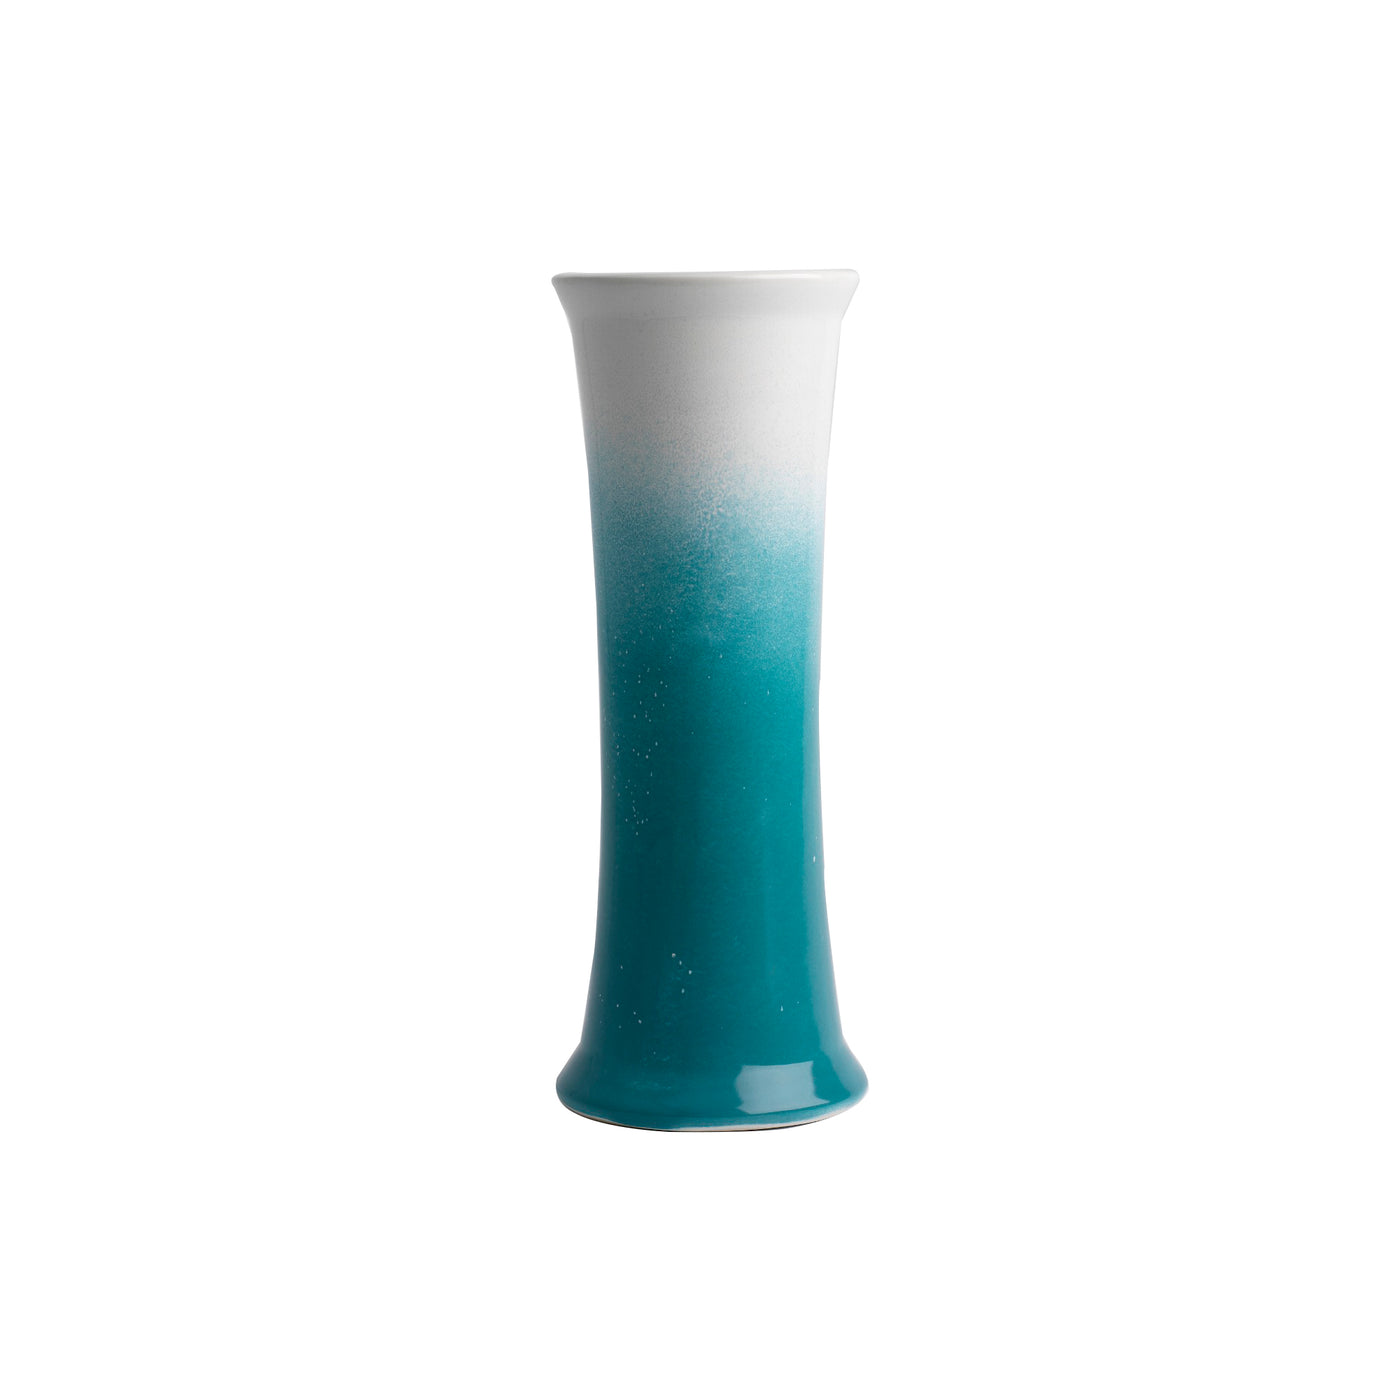 Tall flower vase - Turquoise